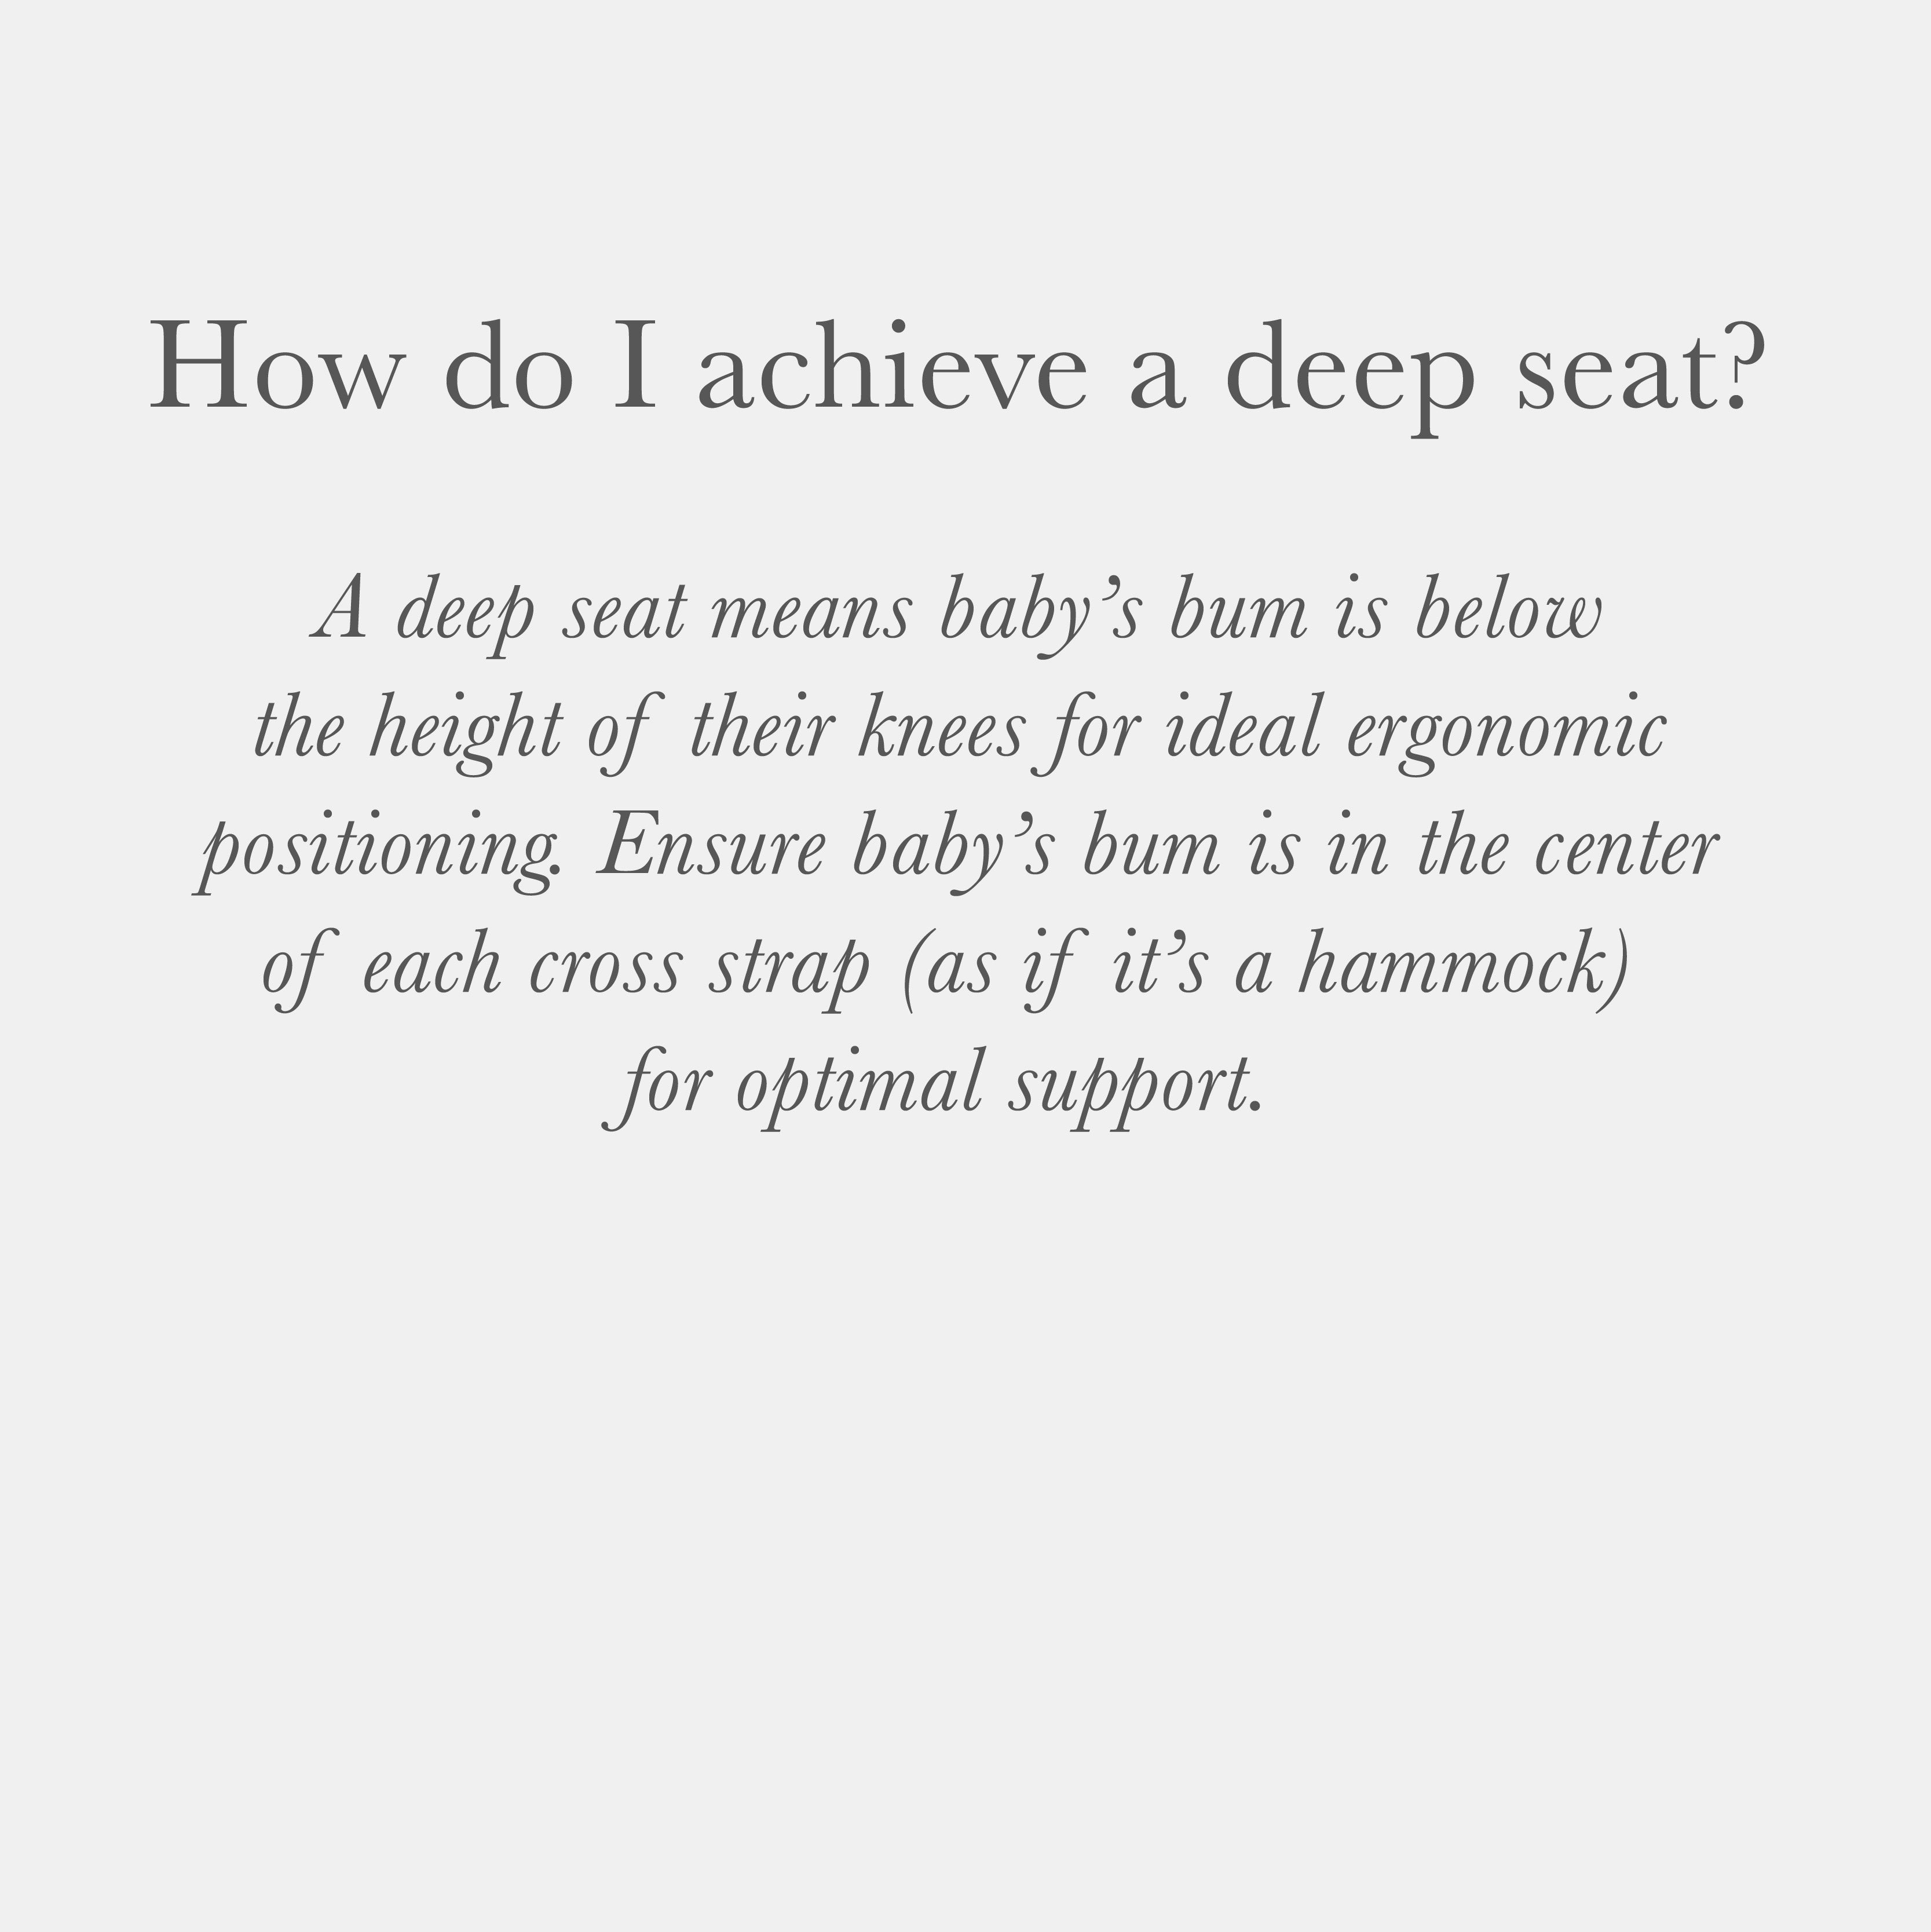 How do I achieve a deep seat?